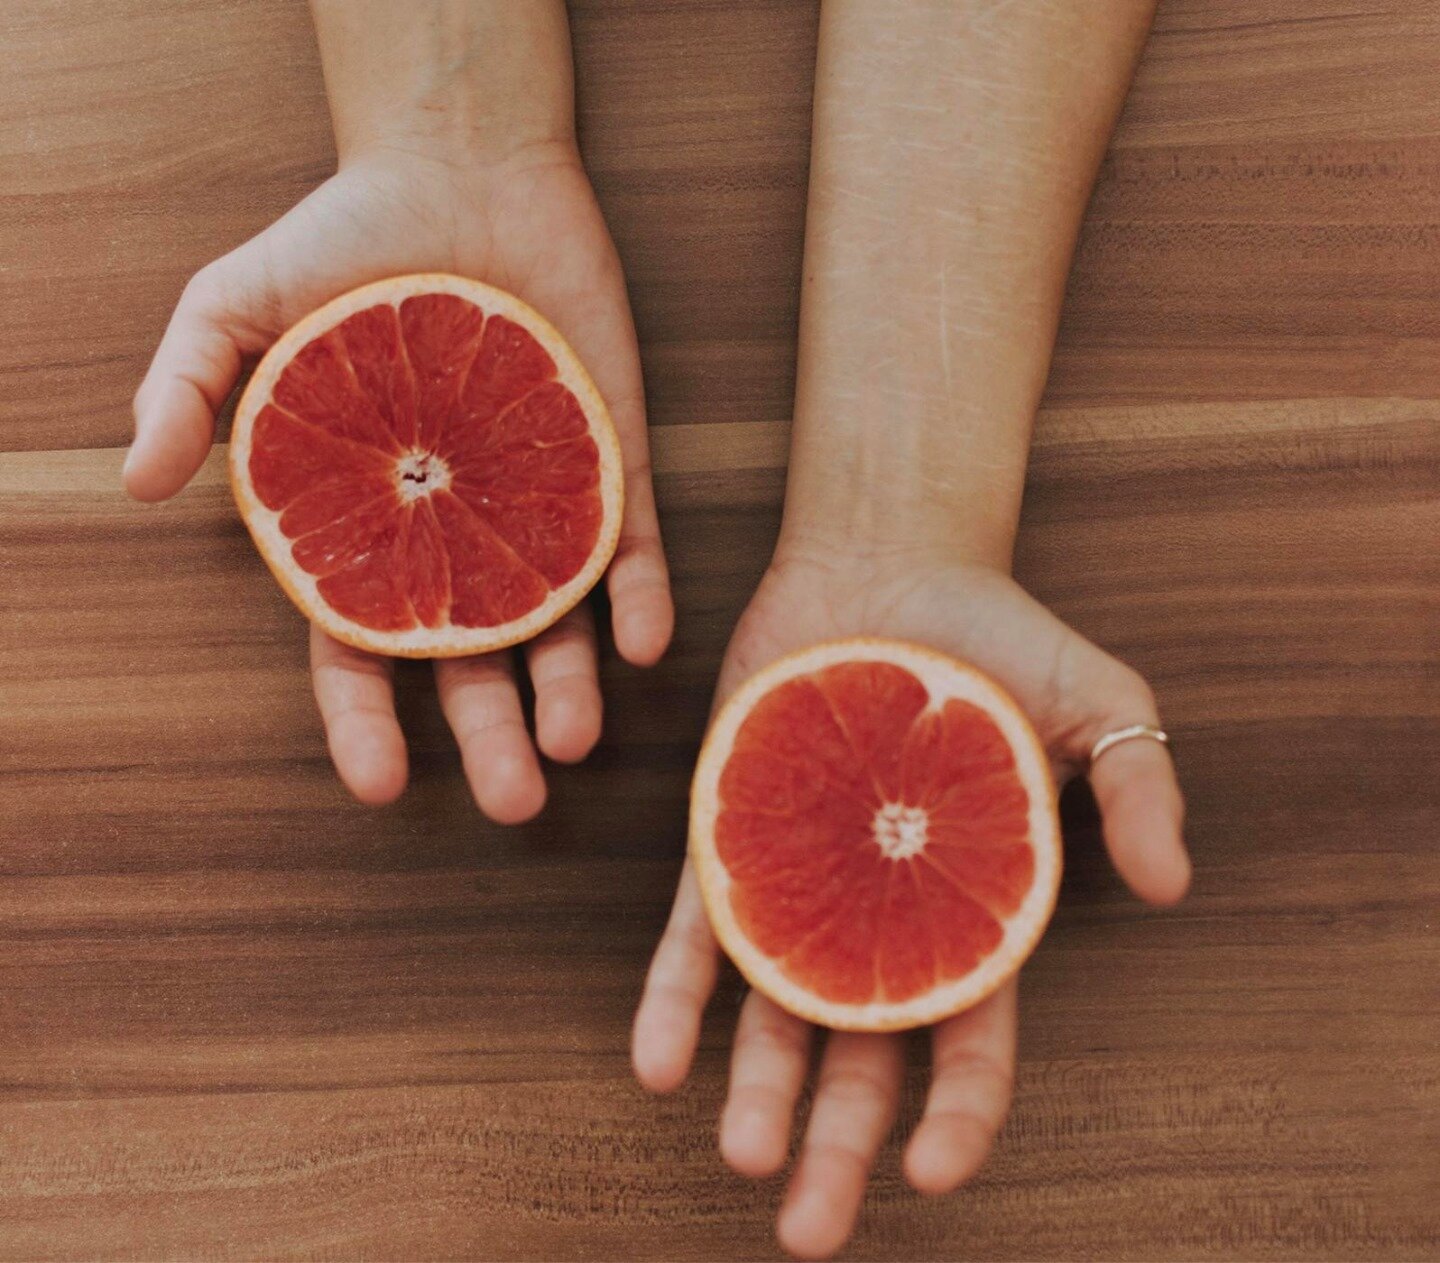 Грейпфрут вес. Семена грейпфрута. Грейпфрут кольцо. Грейпфрут на ногтях. Пальцы в грейпфруте.